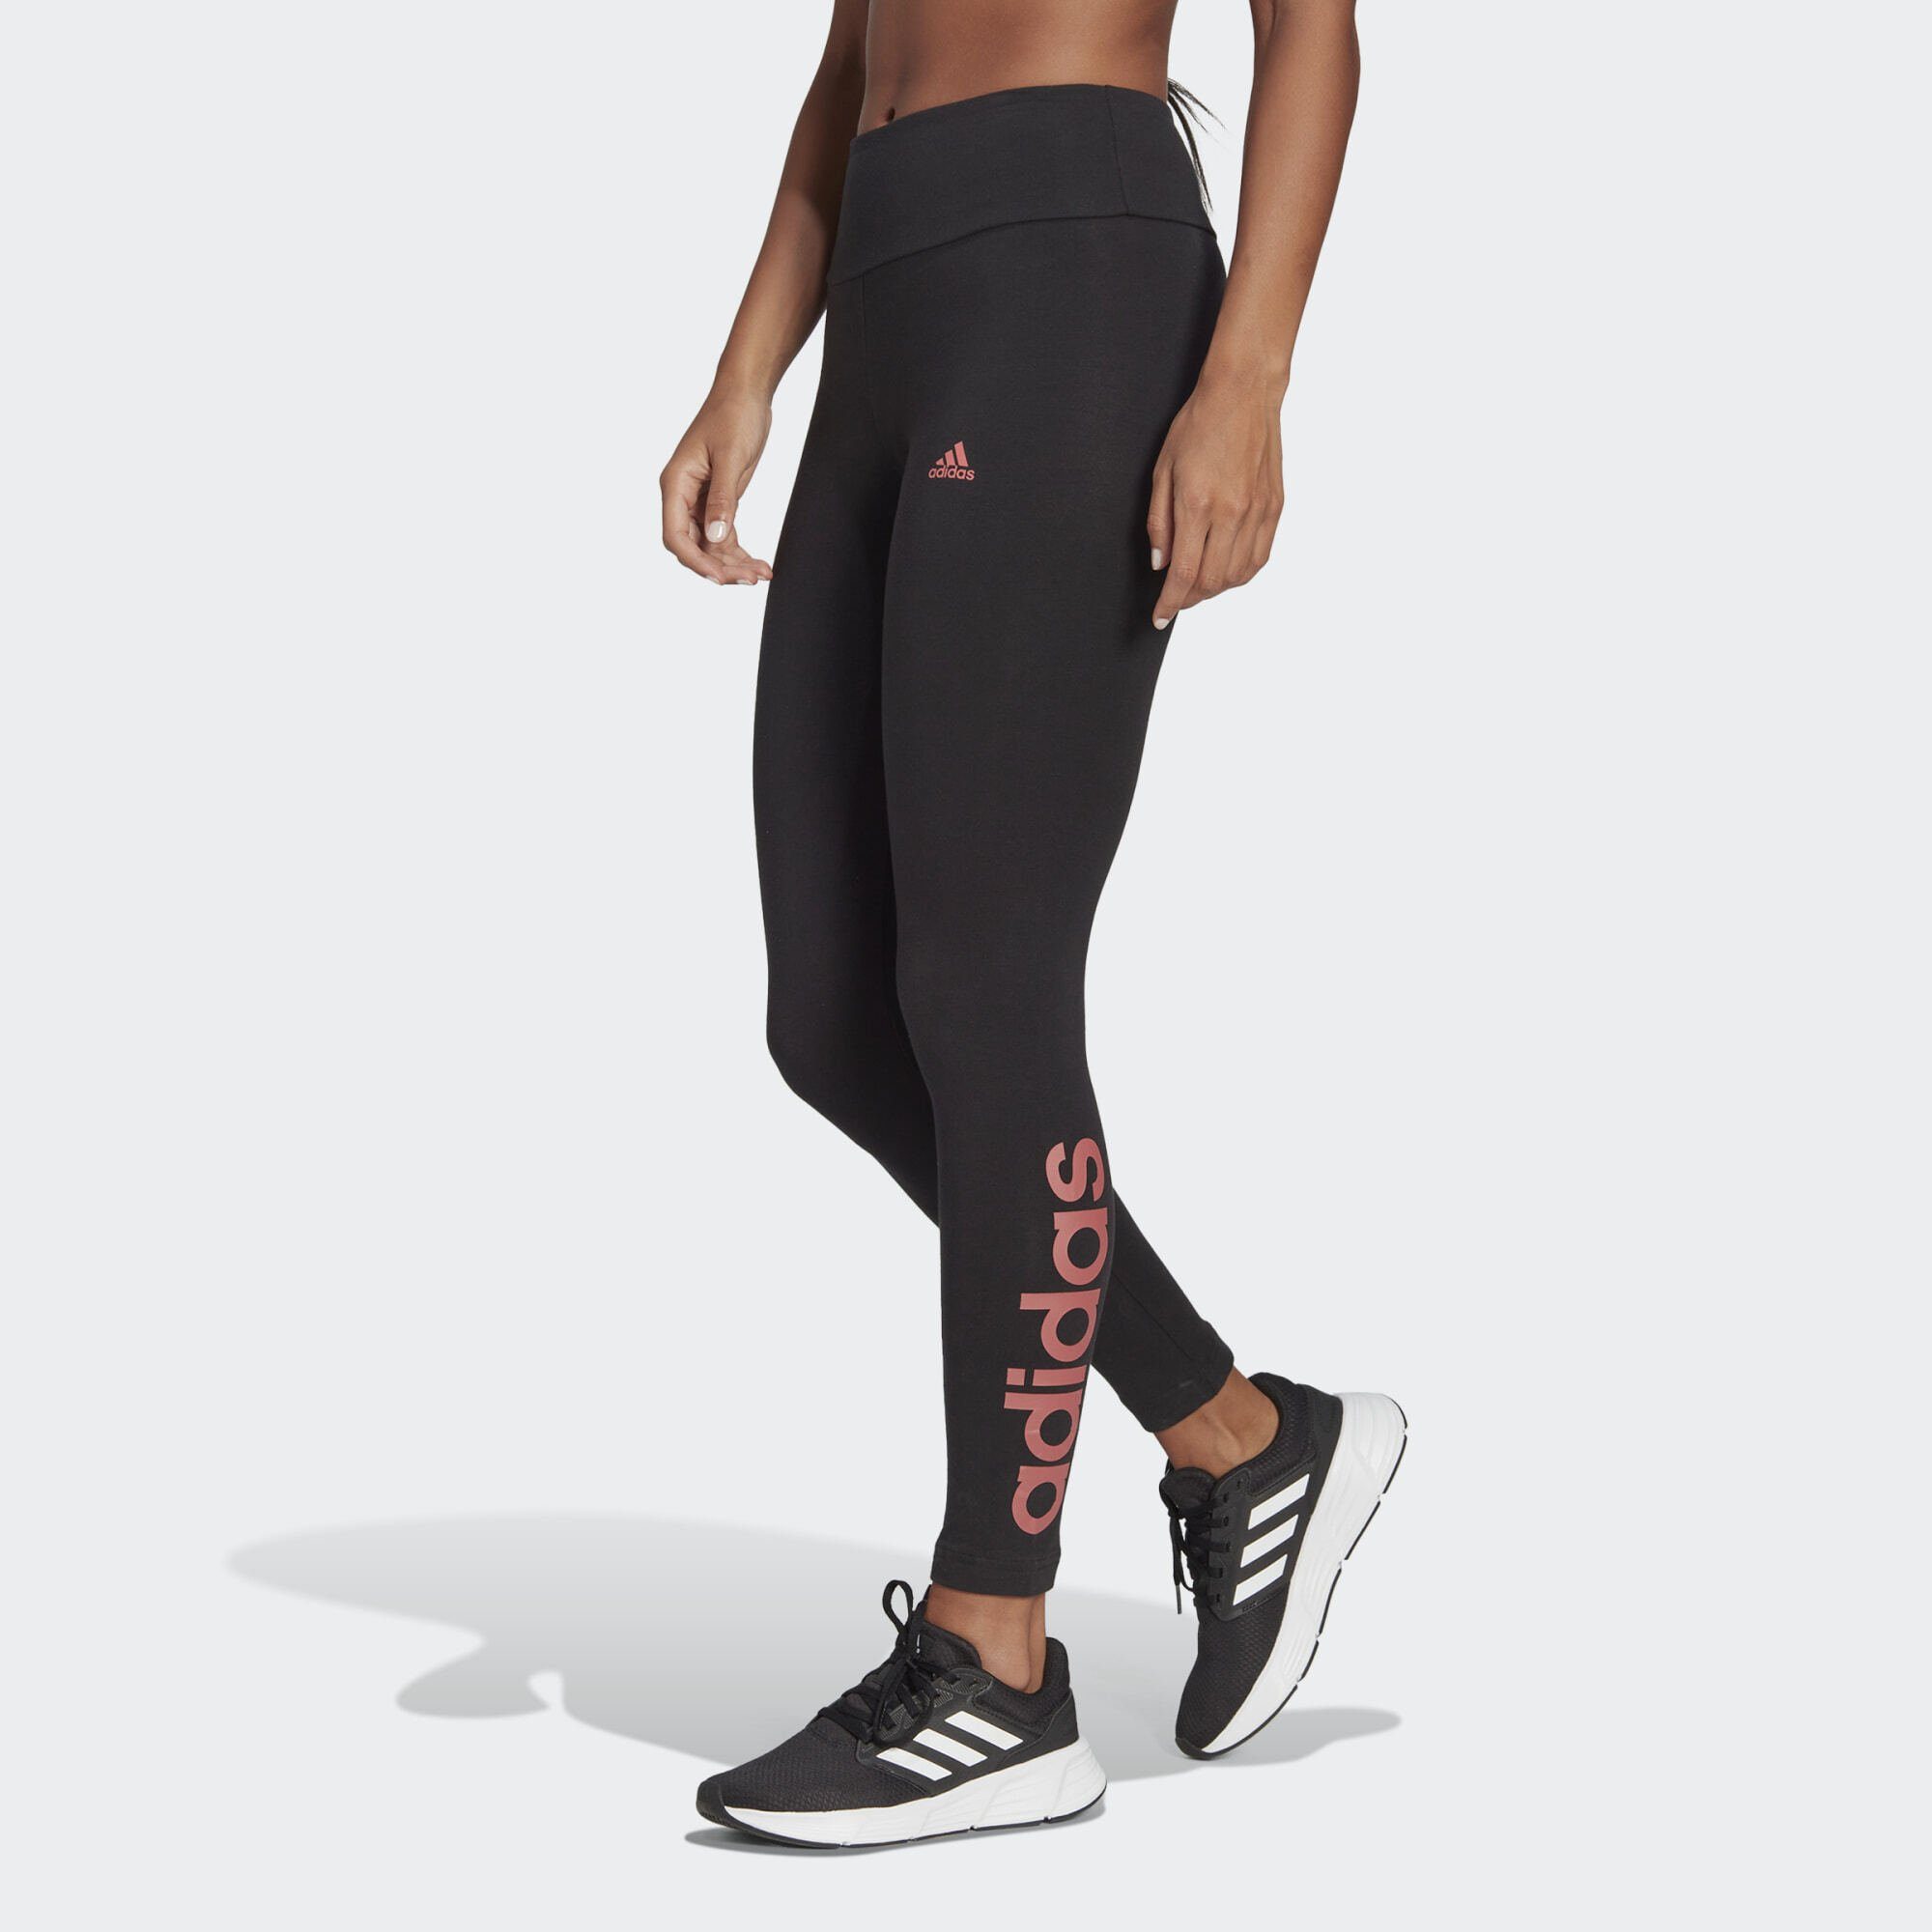 LOGO adidas Wonder ESSENTIALS / HIGH-WAISTED Red Black Sportswear Leggings LEGGINGS